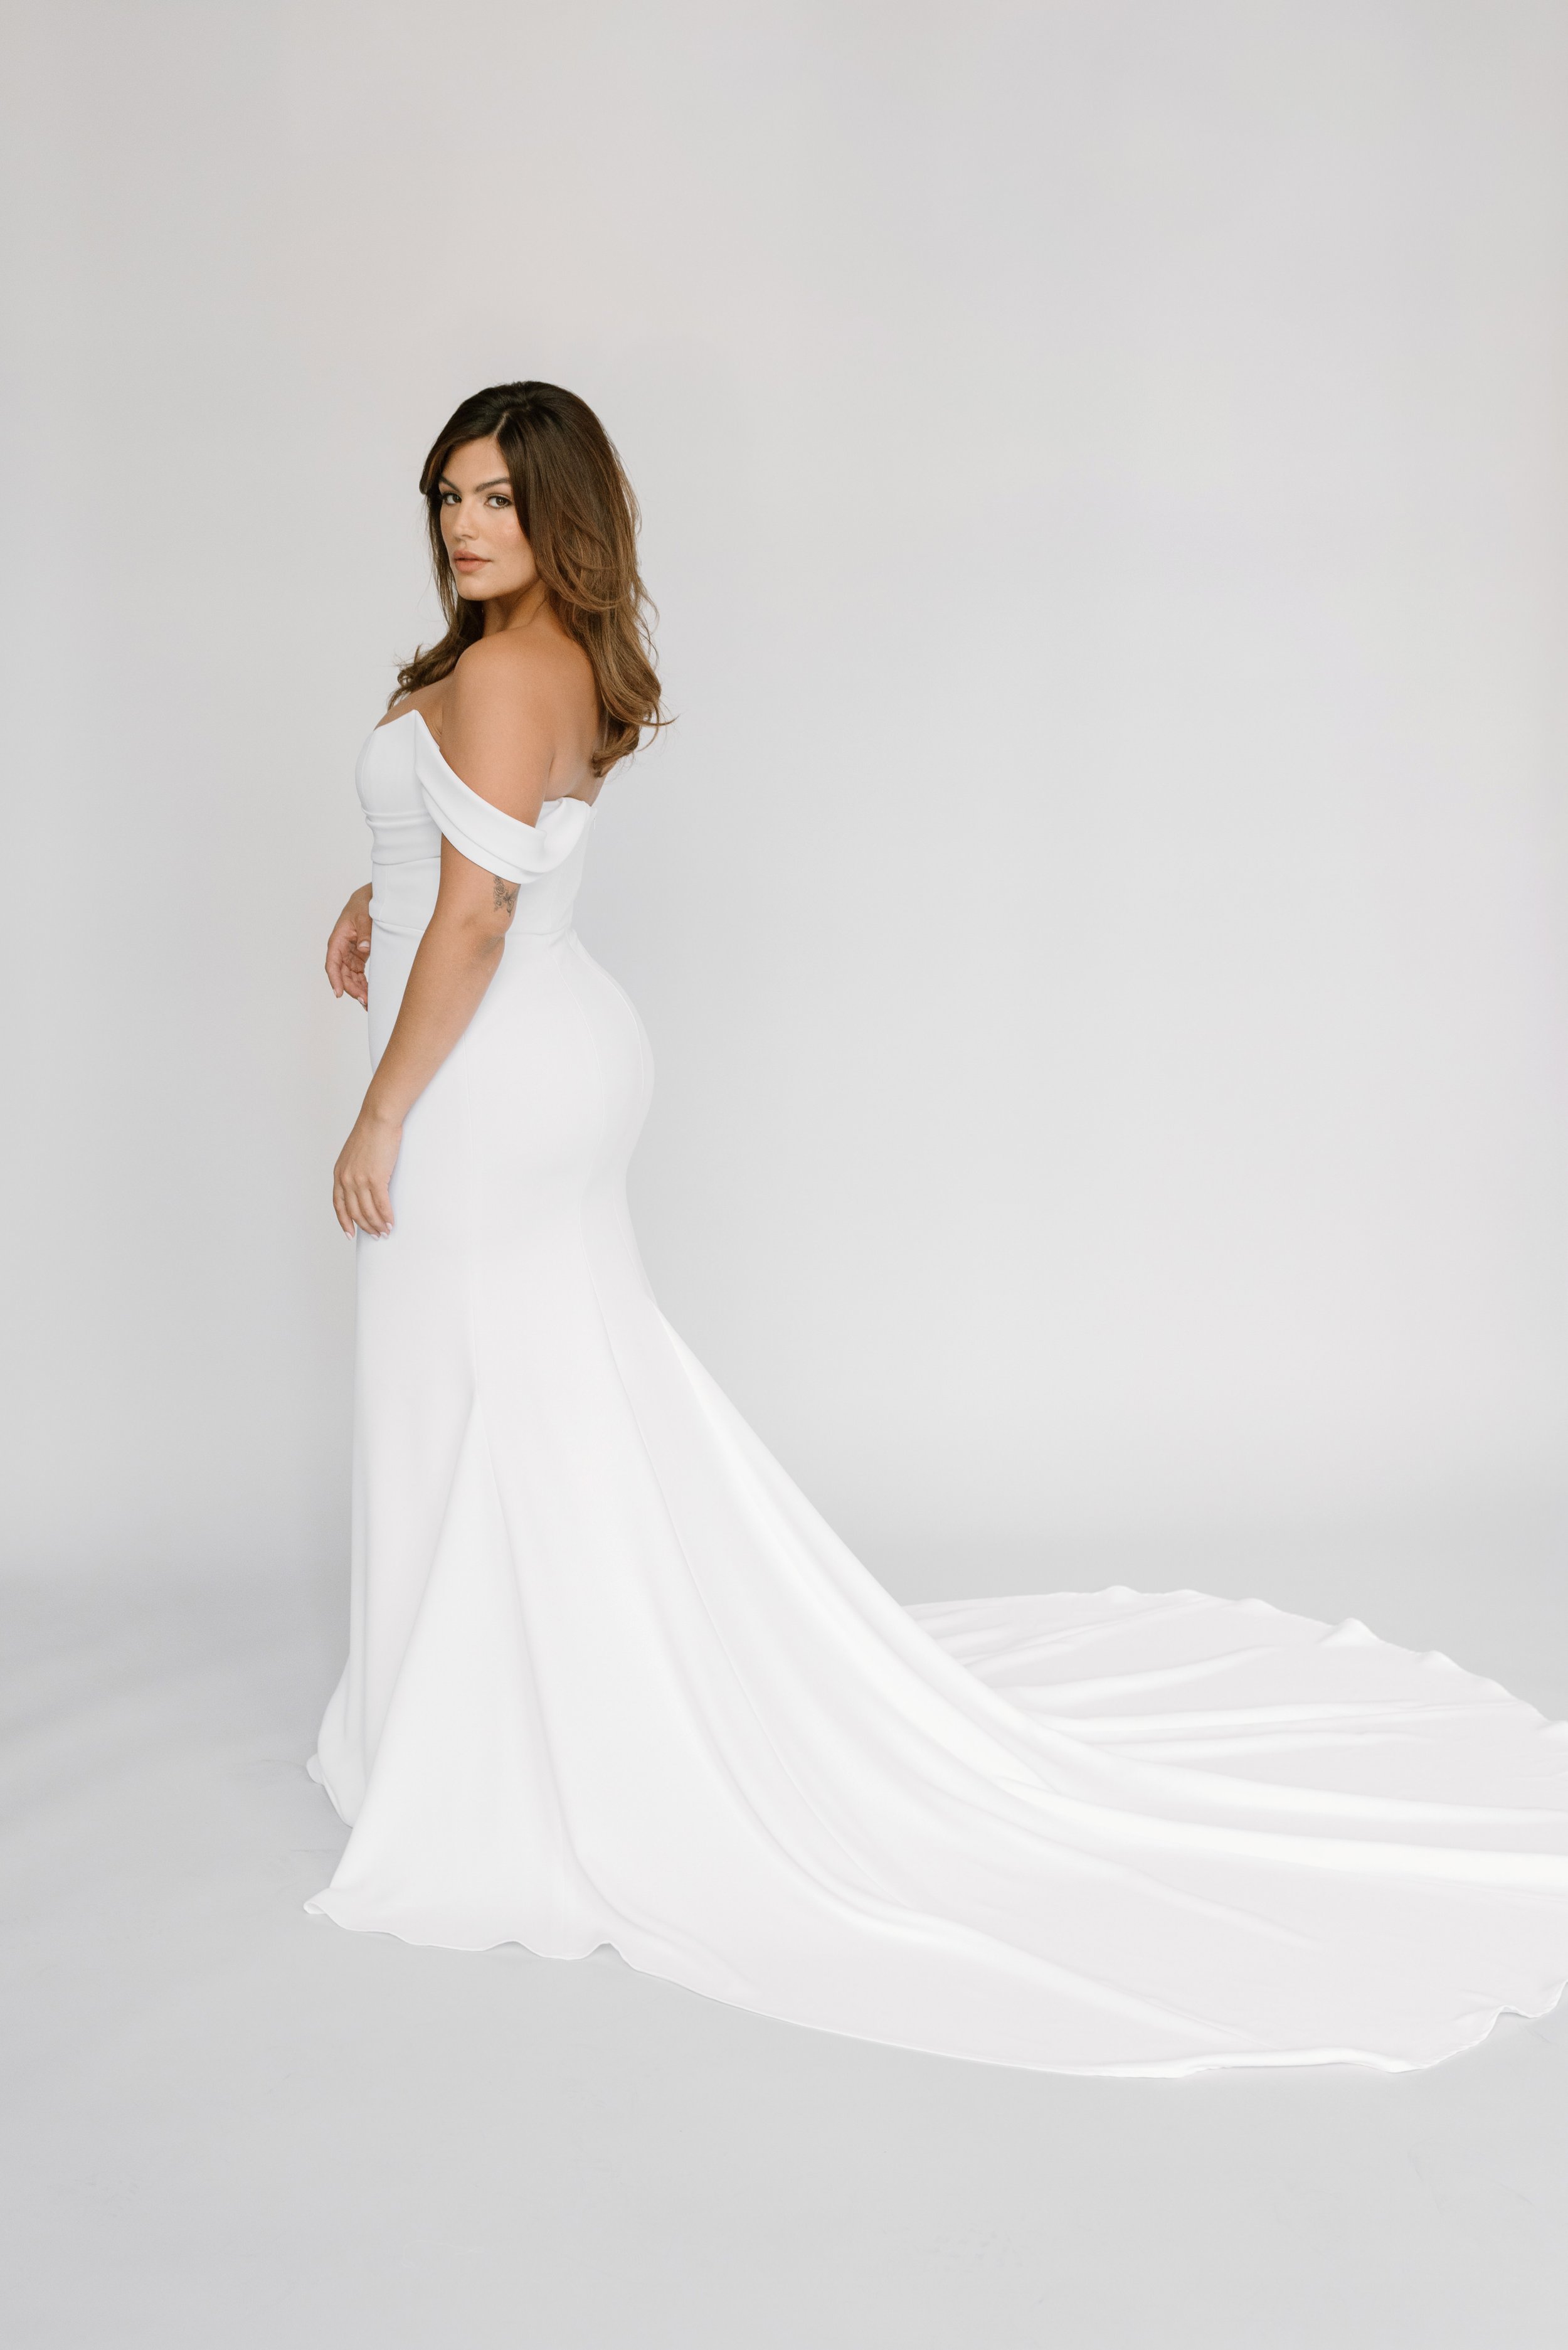 bianca-alyssa-kristin-wedding-dress-10.jpg